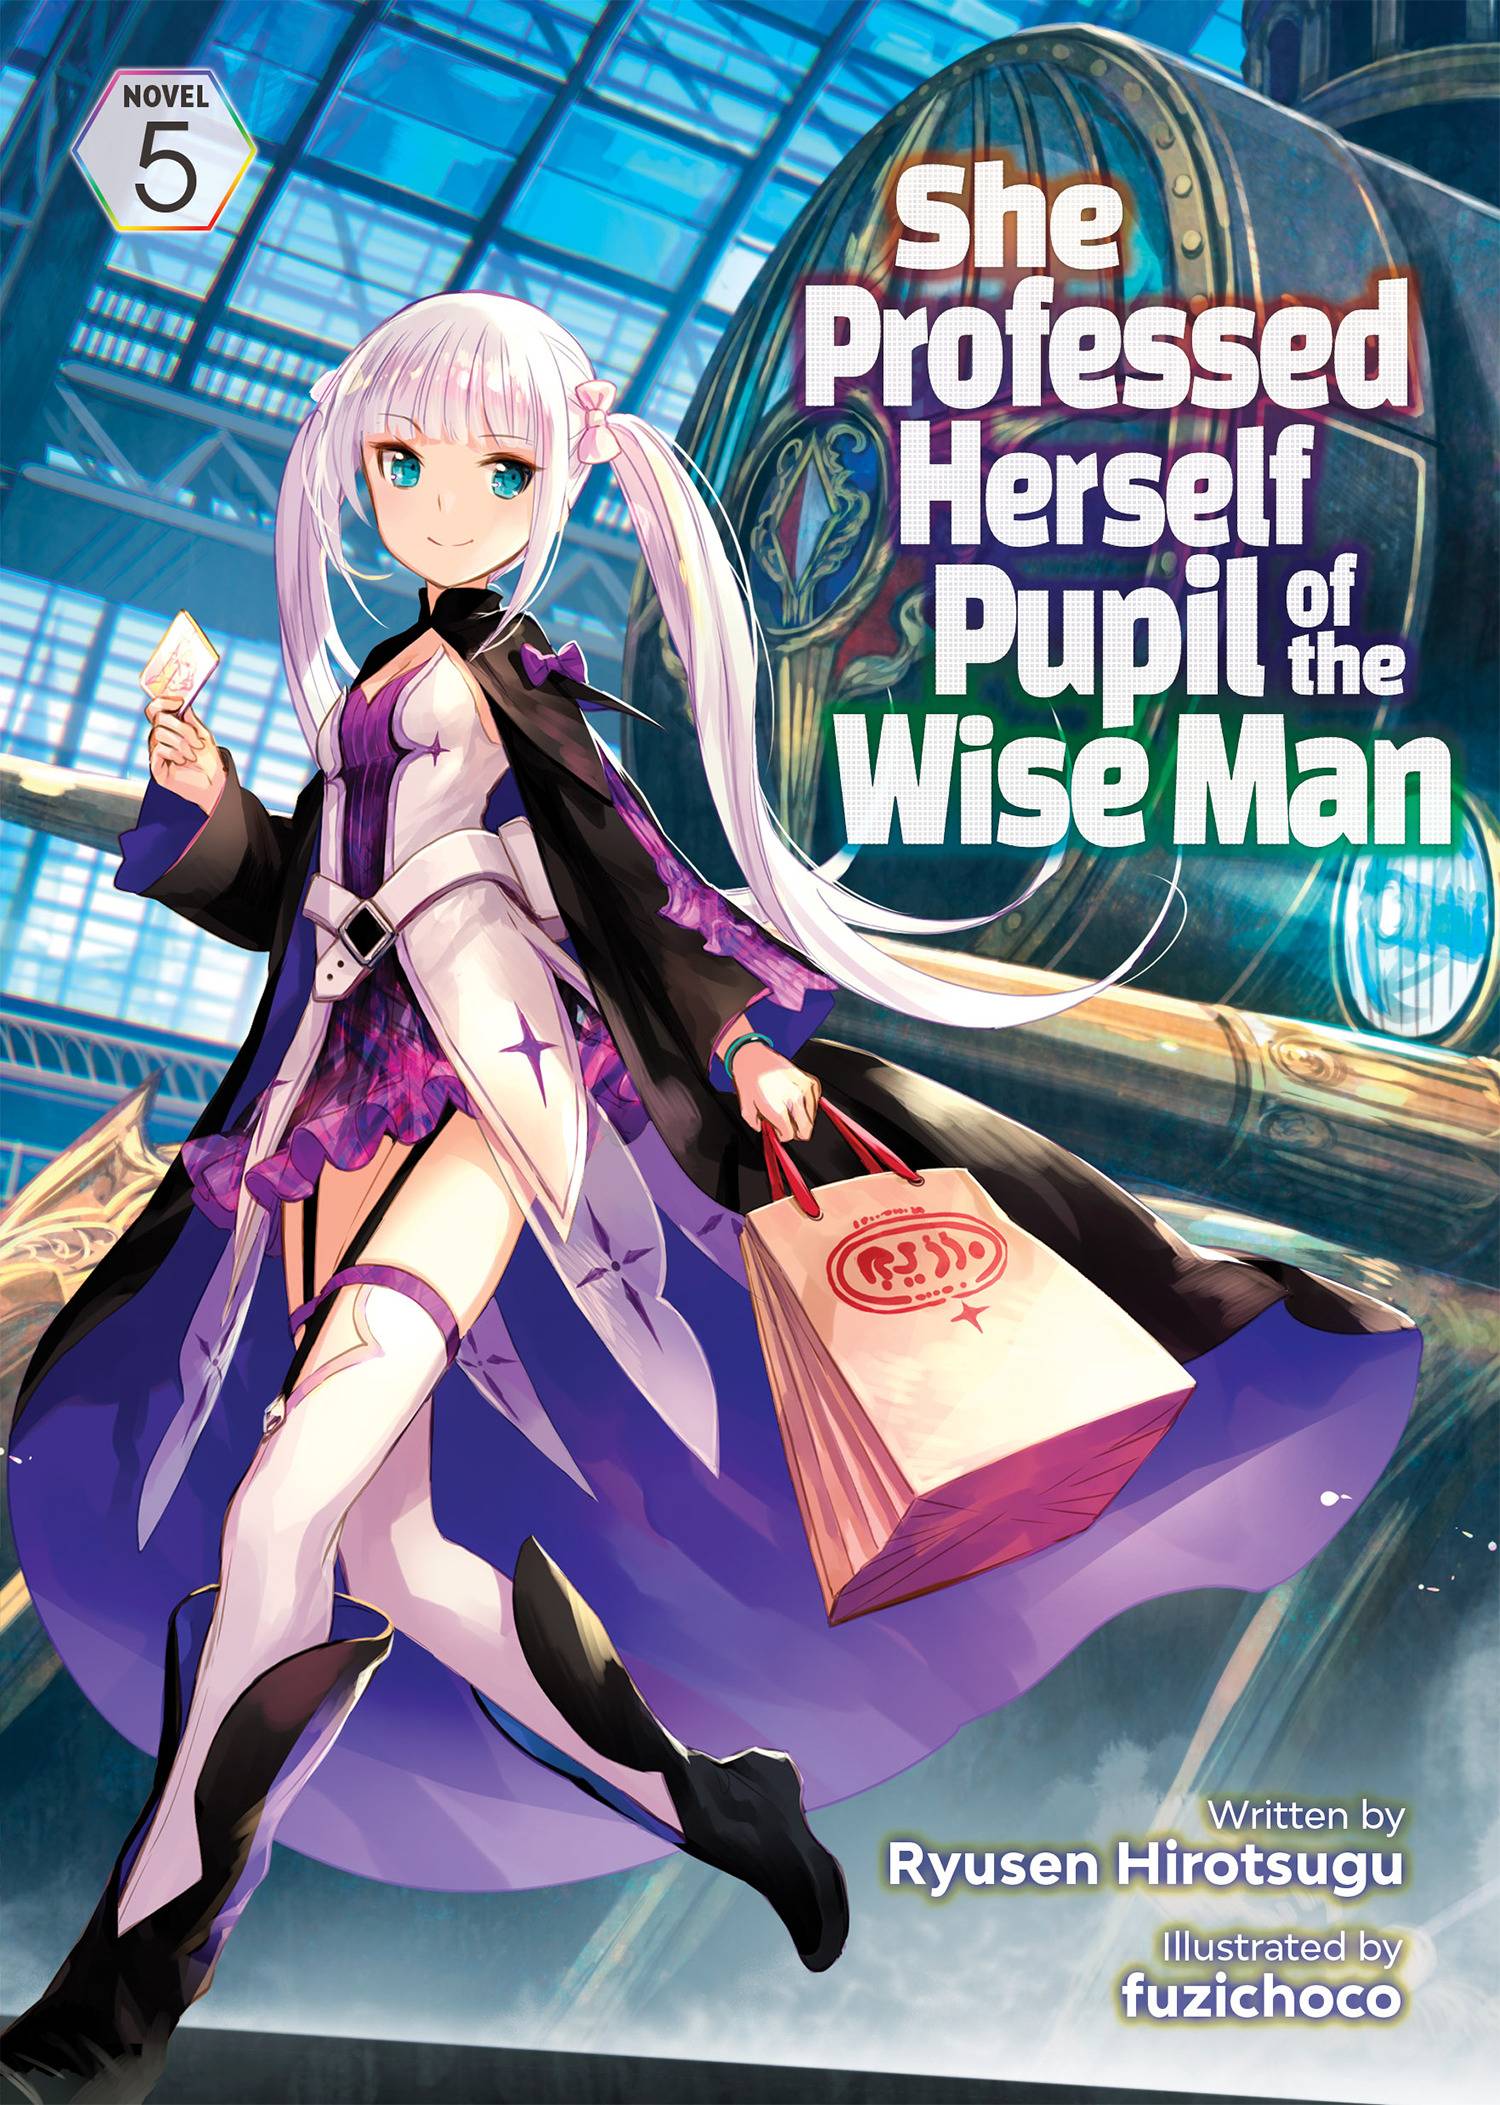 She Professed Herself Pupil of the Wise Man Manga - Read Manga